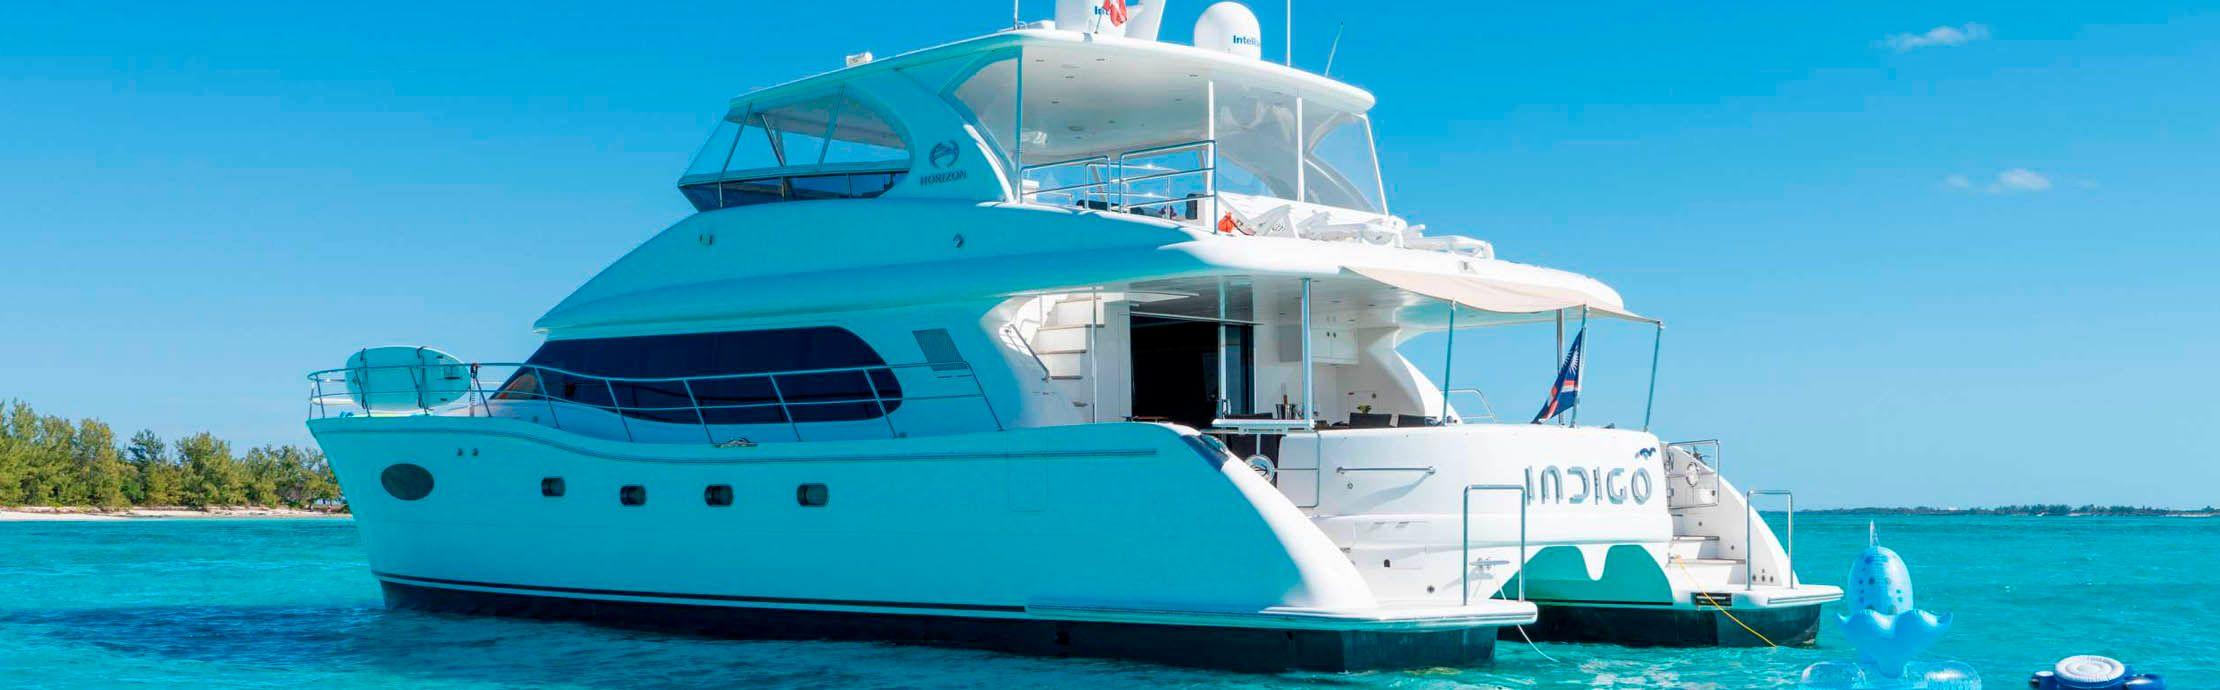 Bahamas Charter Yacht Show Draws Strong Attendance